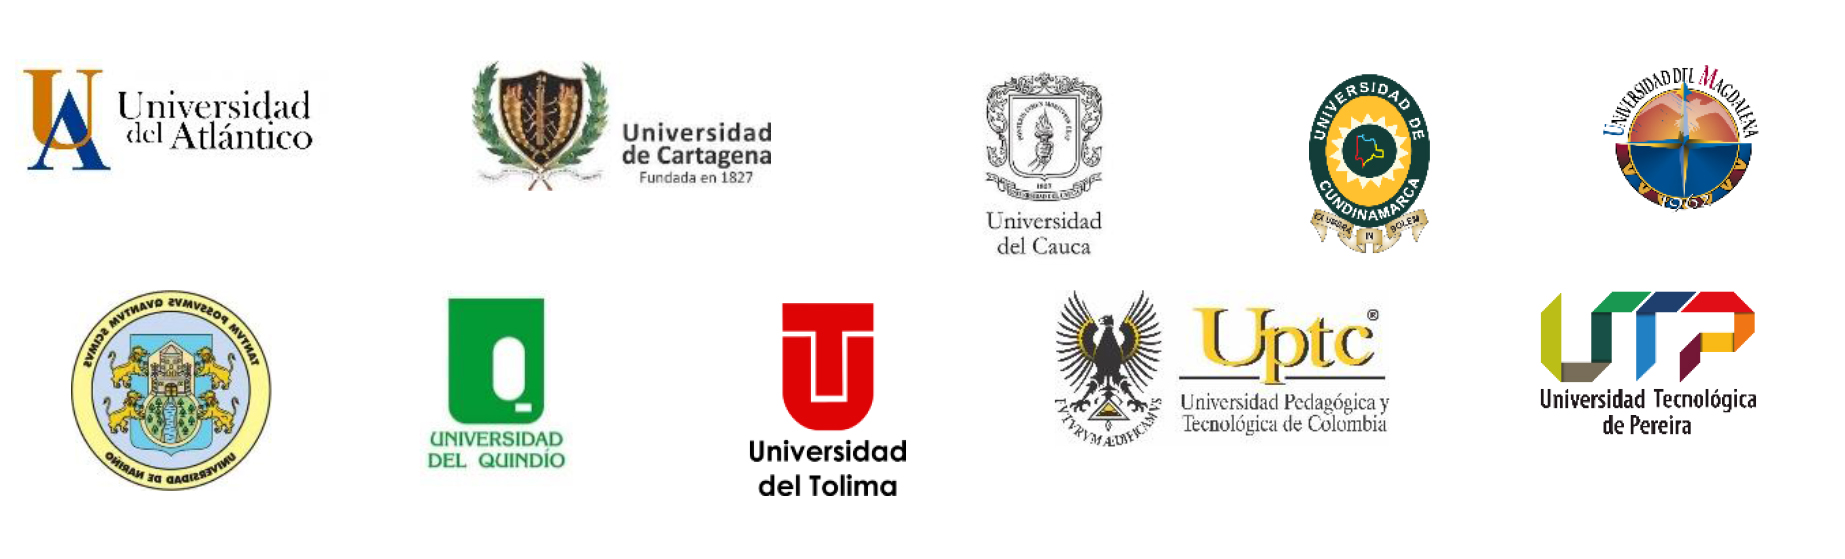 https://periodico.udenar.edu.co/wp-content/uploads/2018/10/logos.jpg